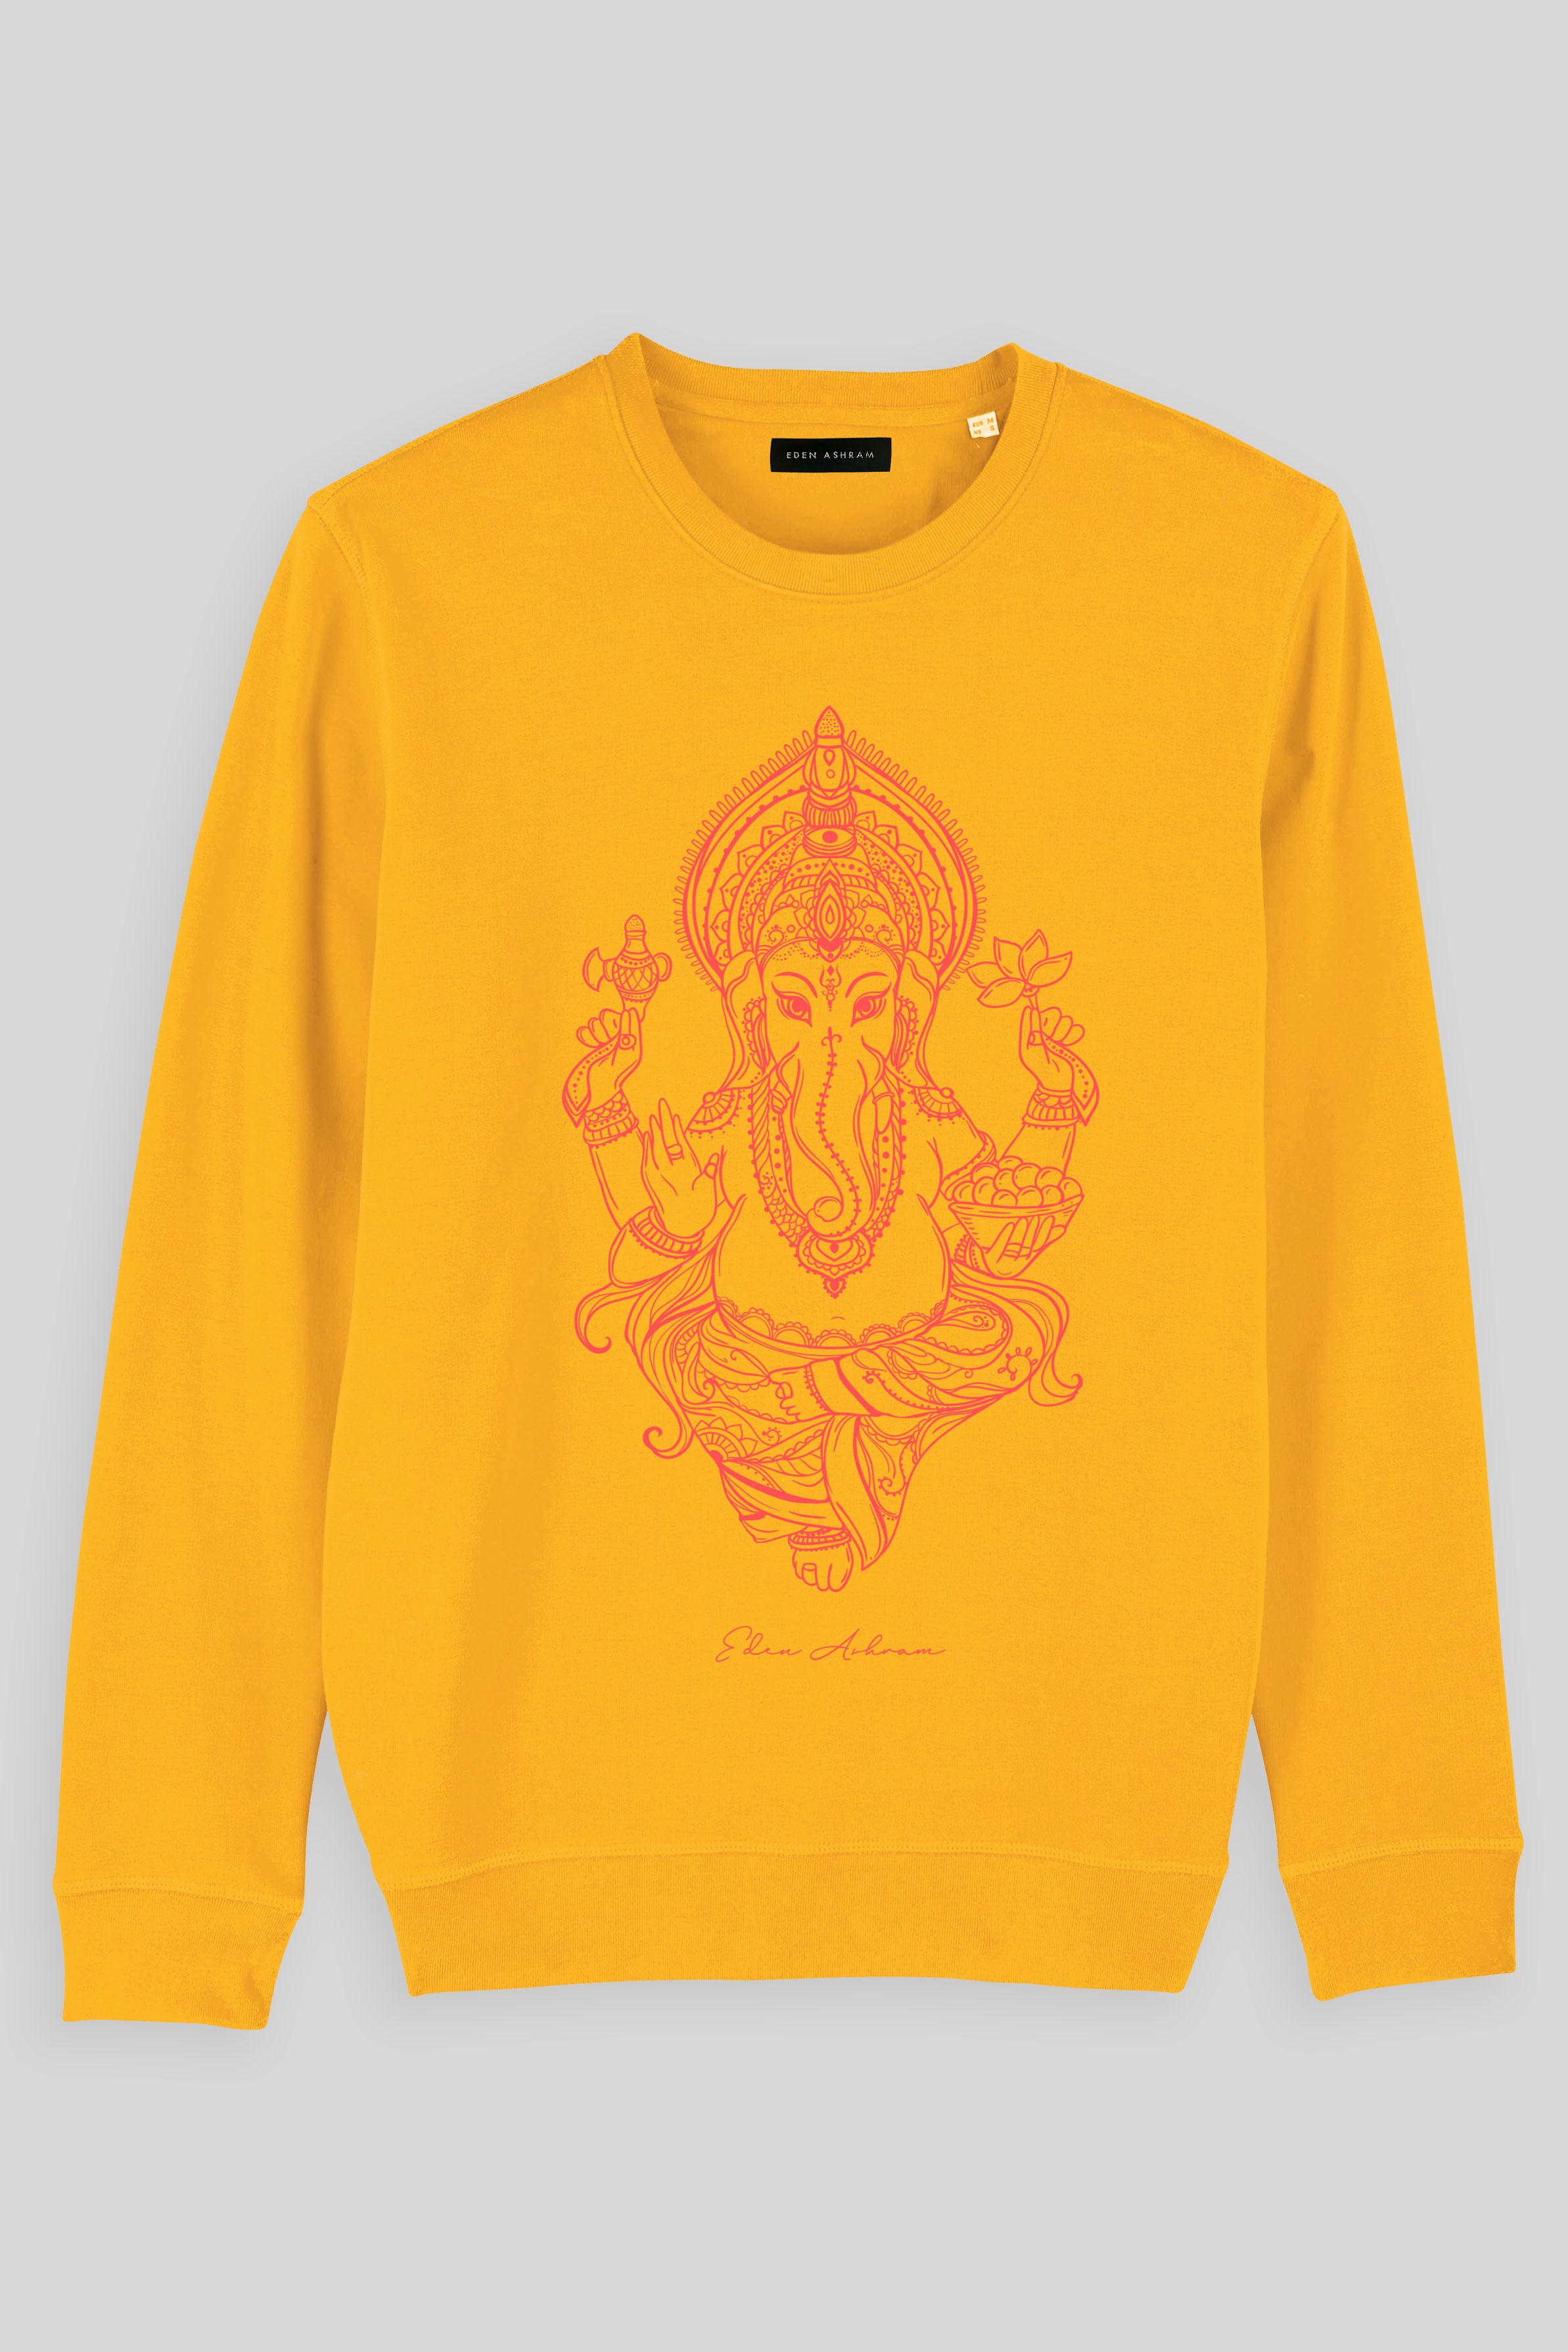 Eden Ashram Ganesha Premium Crew Neck Sweatshirt Spectra Yellow